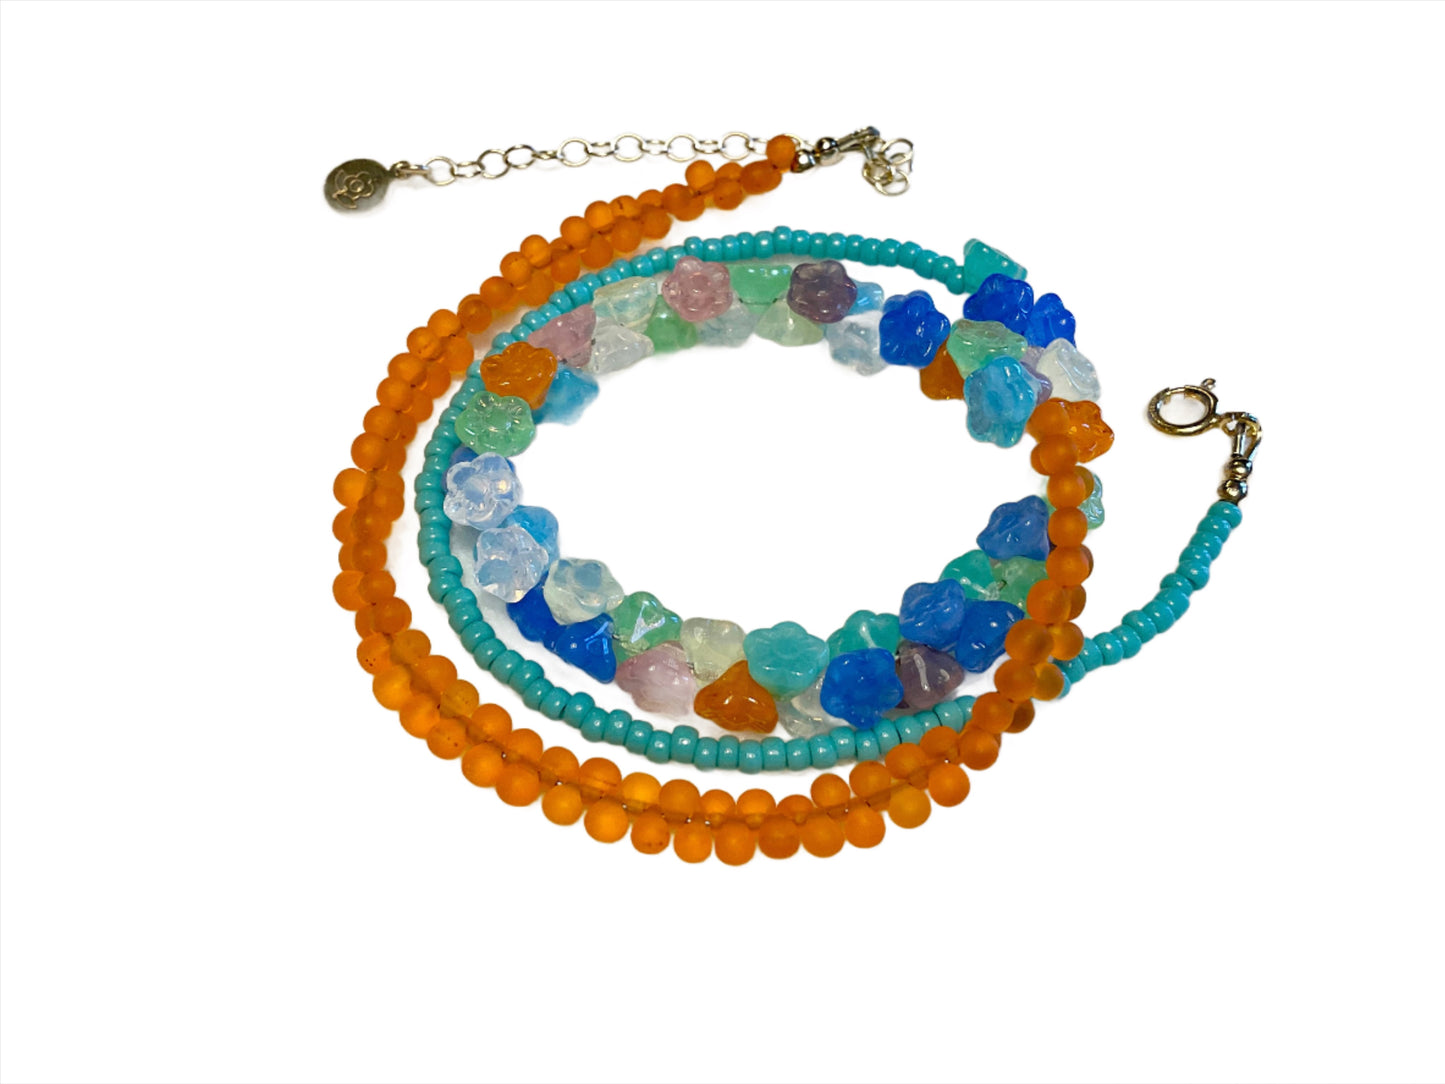 Flower Power Blue/Green/Orange Necklace or Wrap Bracelet